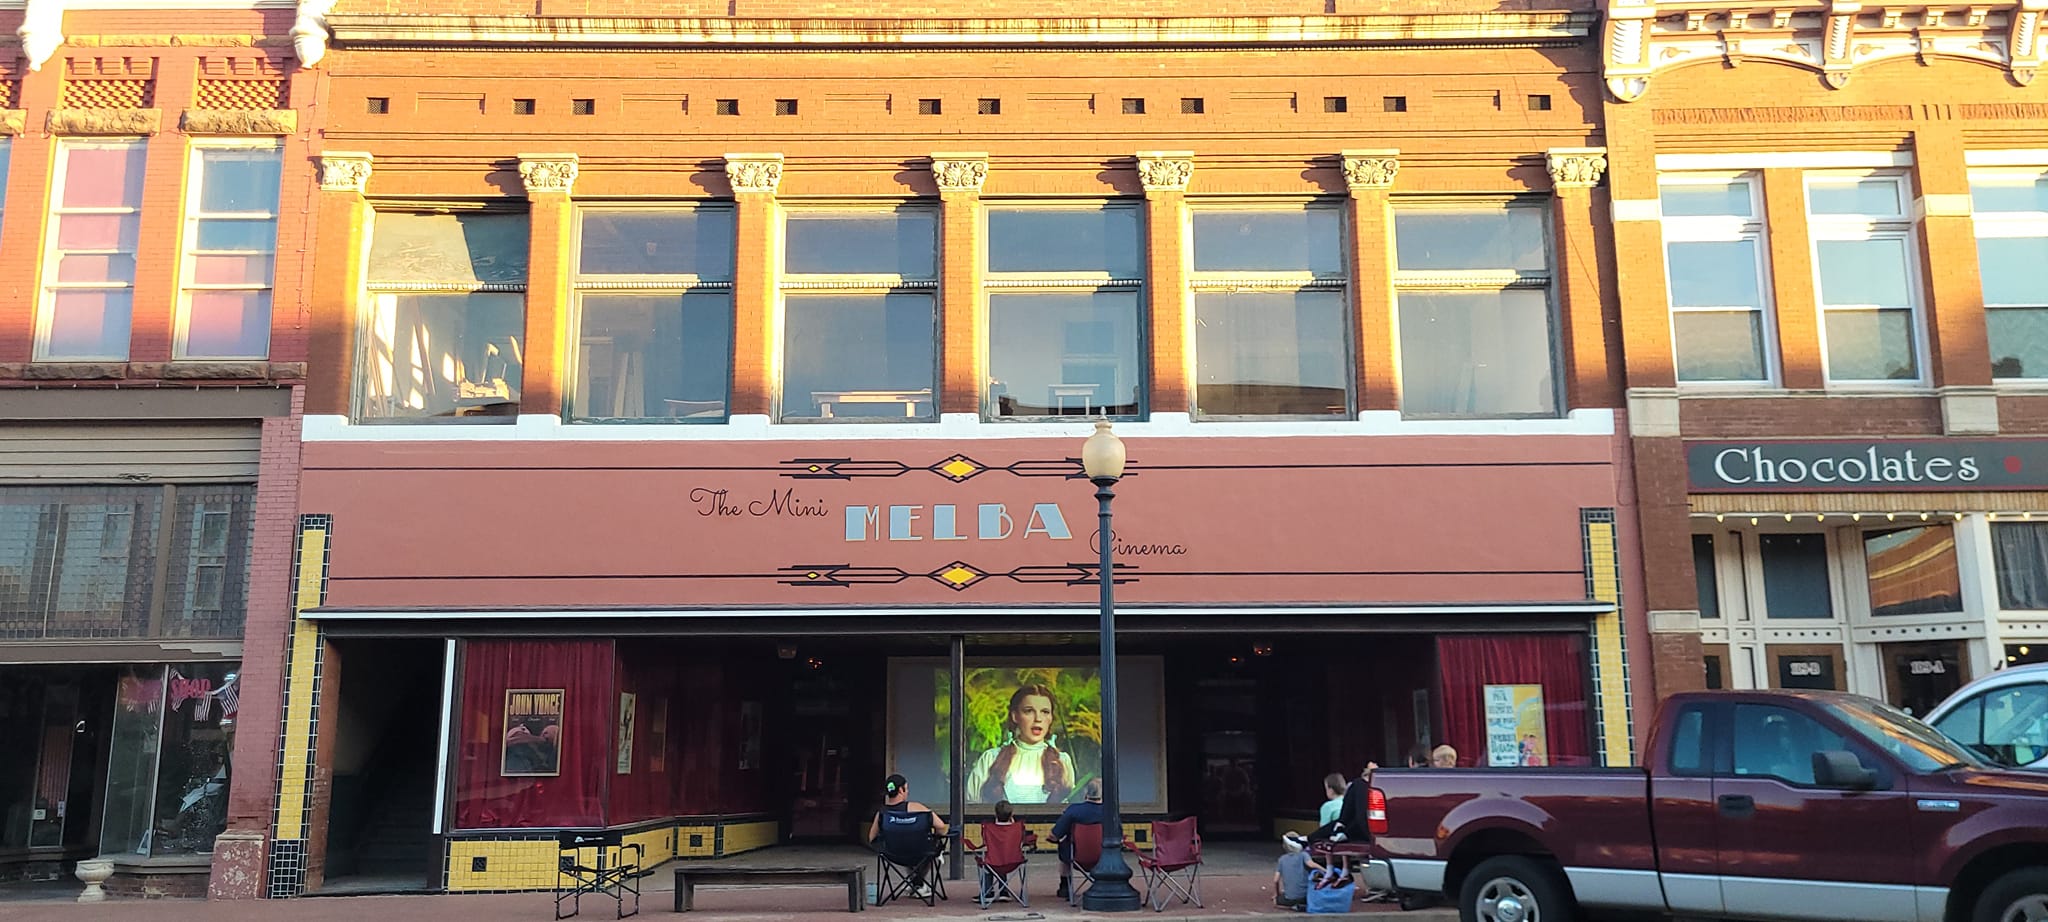 Mini Melba Cinema brings round-the-clock entertainment to downtown Guthrie